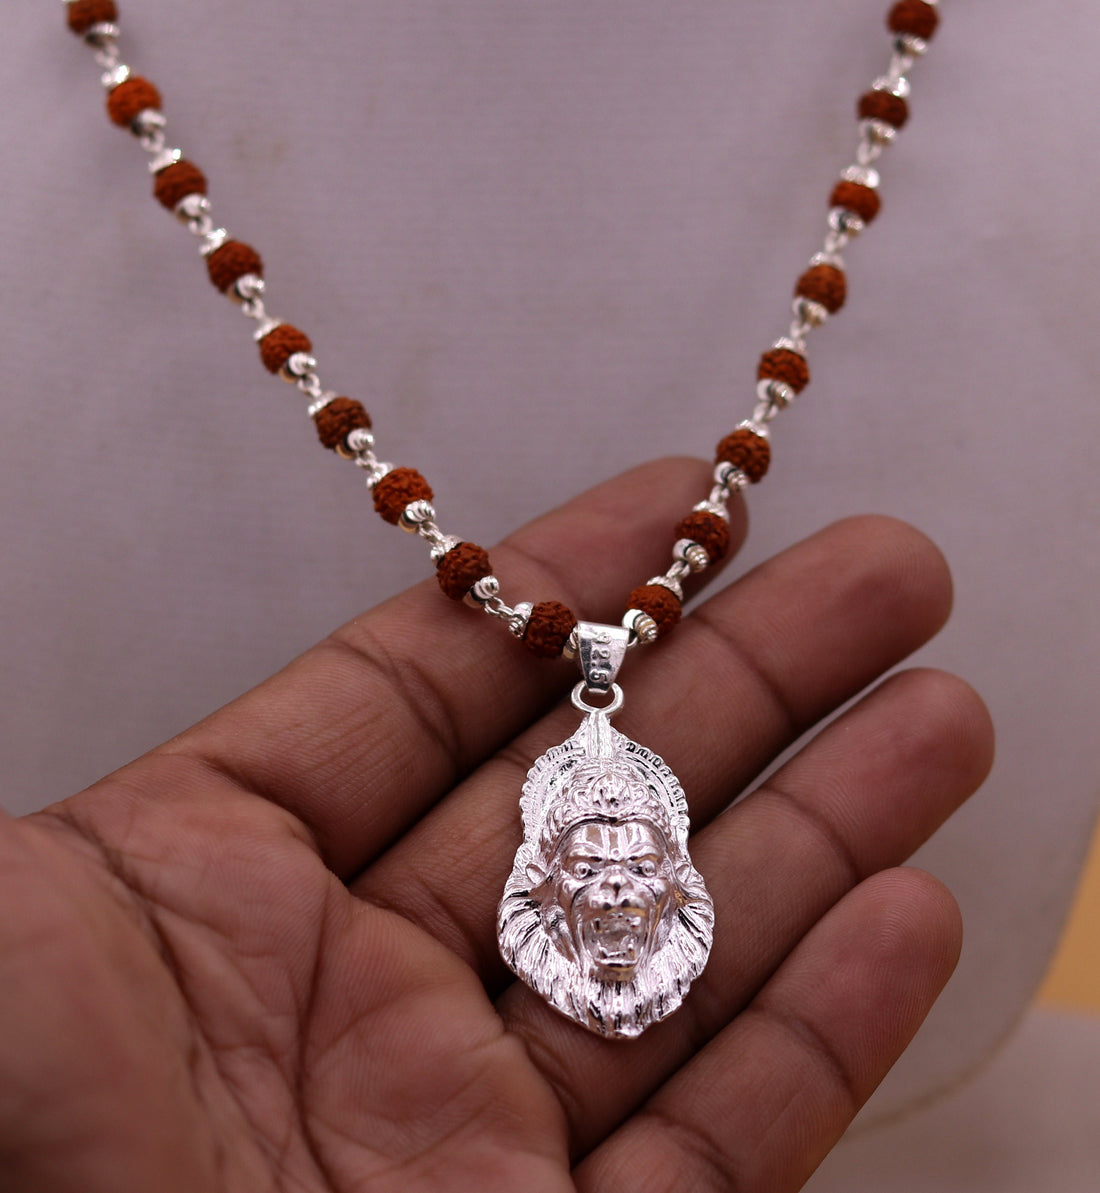 Antique style handmade 925 sterling silver Lord Vishnu avtar narsimha pendant natural Rudraksha beads treble necklace jewelry set37 - TRIBAL ORNAMENTS